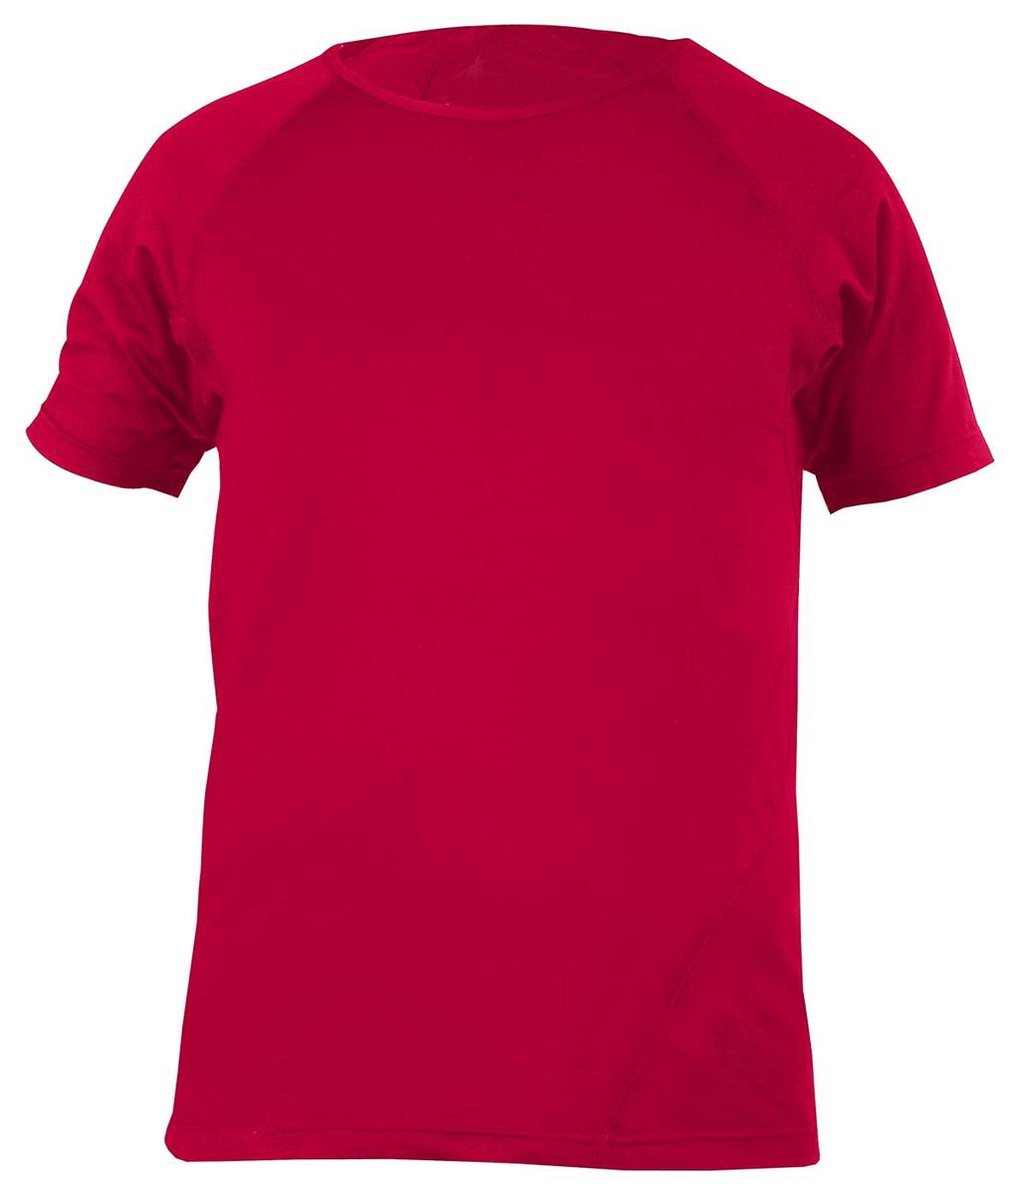 Yoga-T-Shirt, men - chili red S Loungewear shirt YOGISTAR